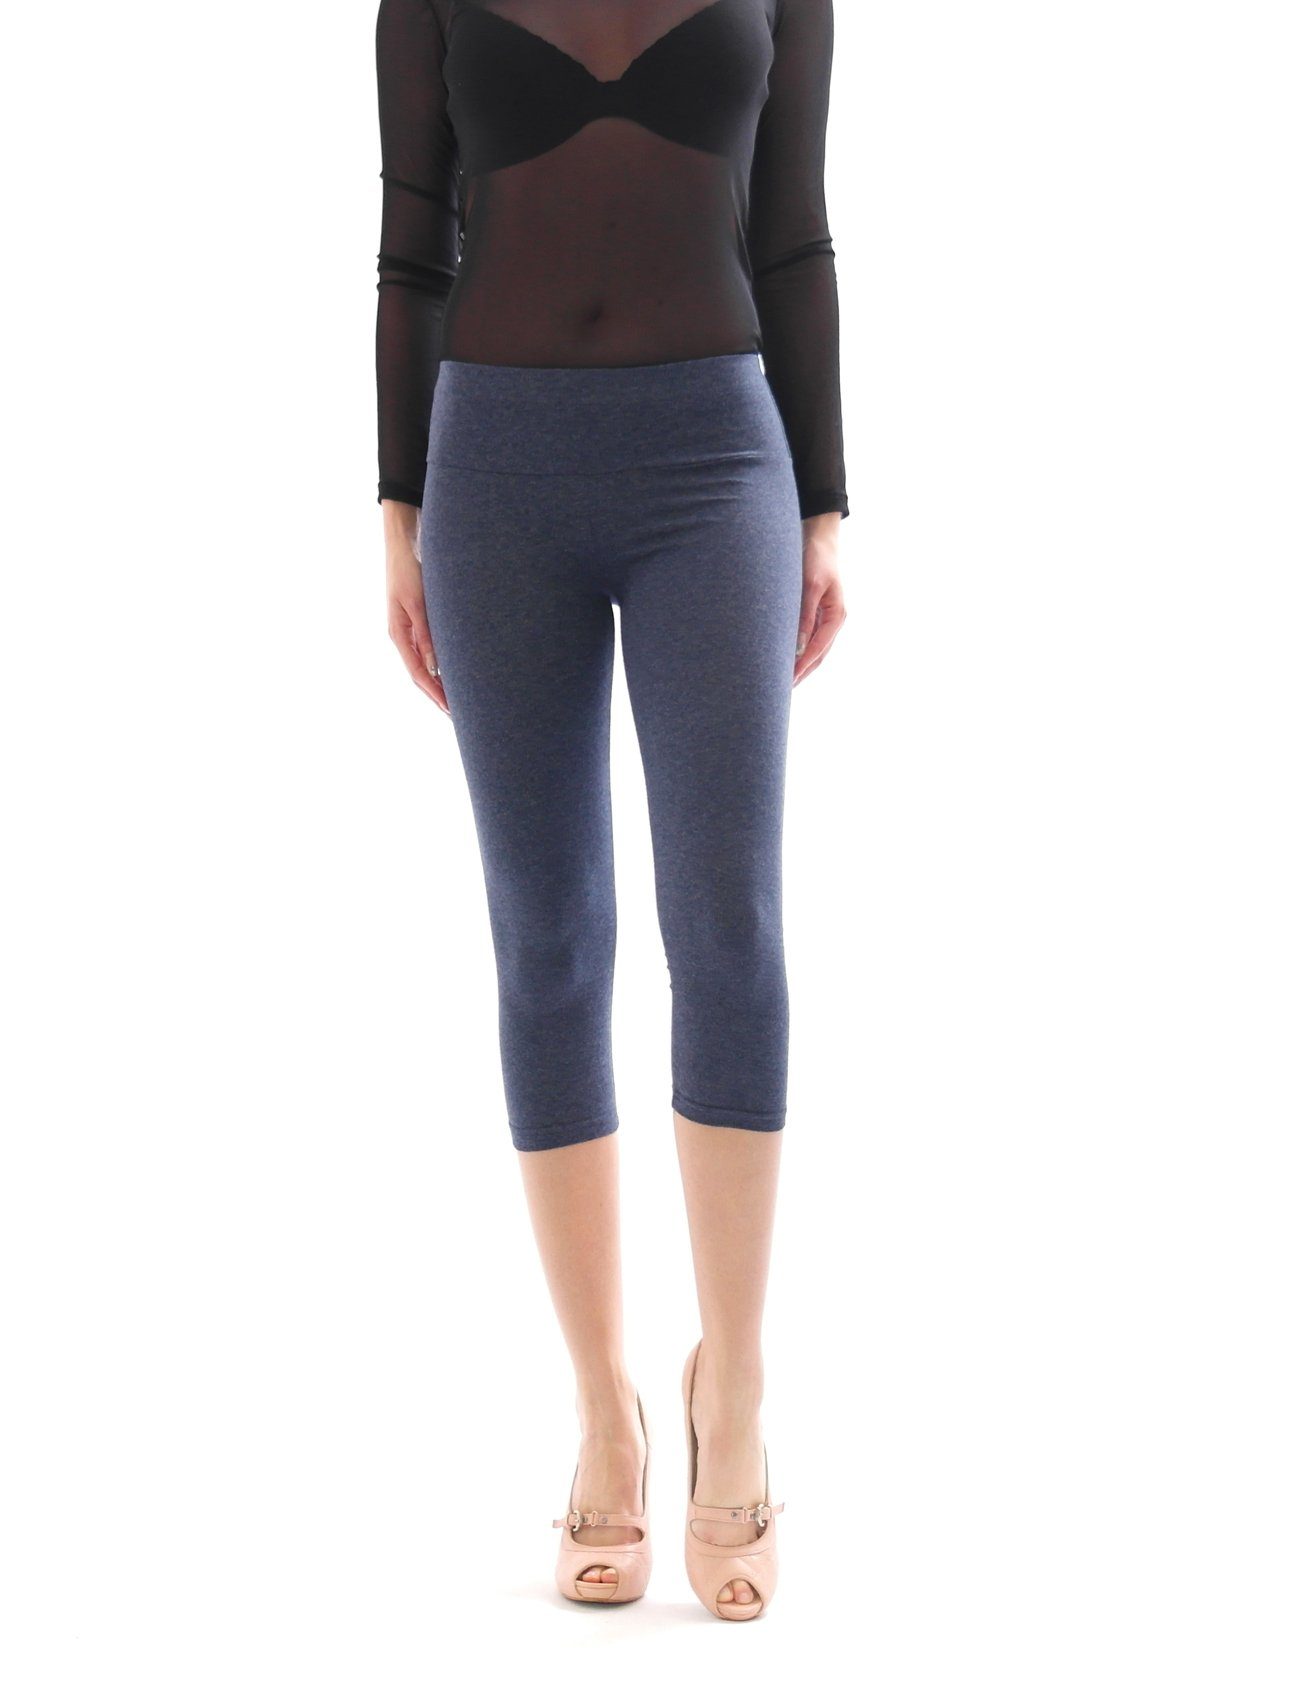 Taschen SYS Leggings Damen hoher Baumwolle Hose mit 3/4 Bund Capri Caprileggings jeans Leggins